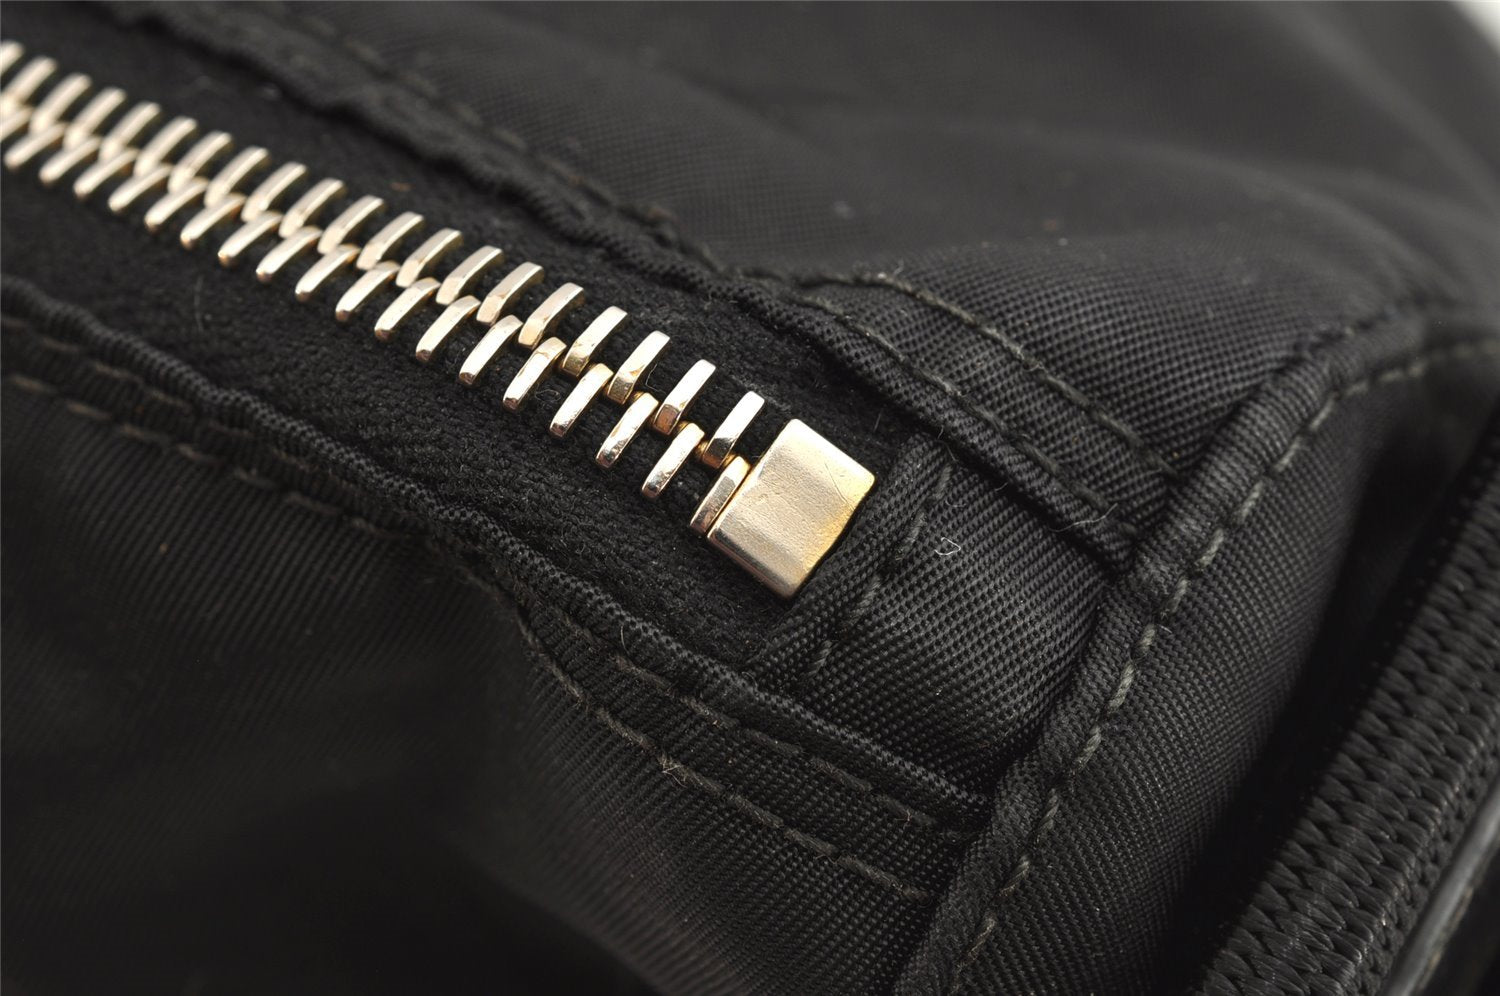 Authentic PRADA Nylon Tessuto Leather Shoulder Cross Body Bag Black 9430J